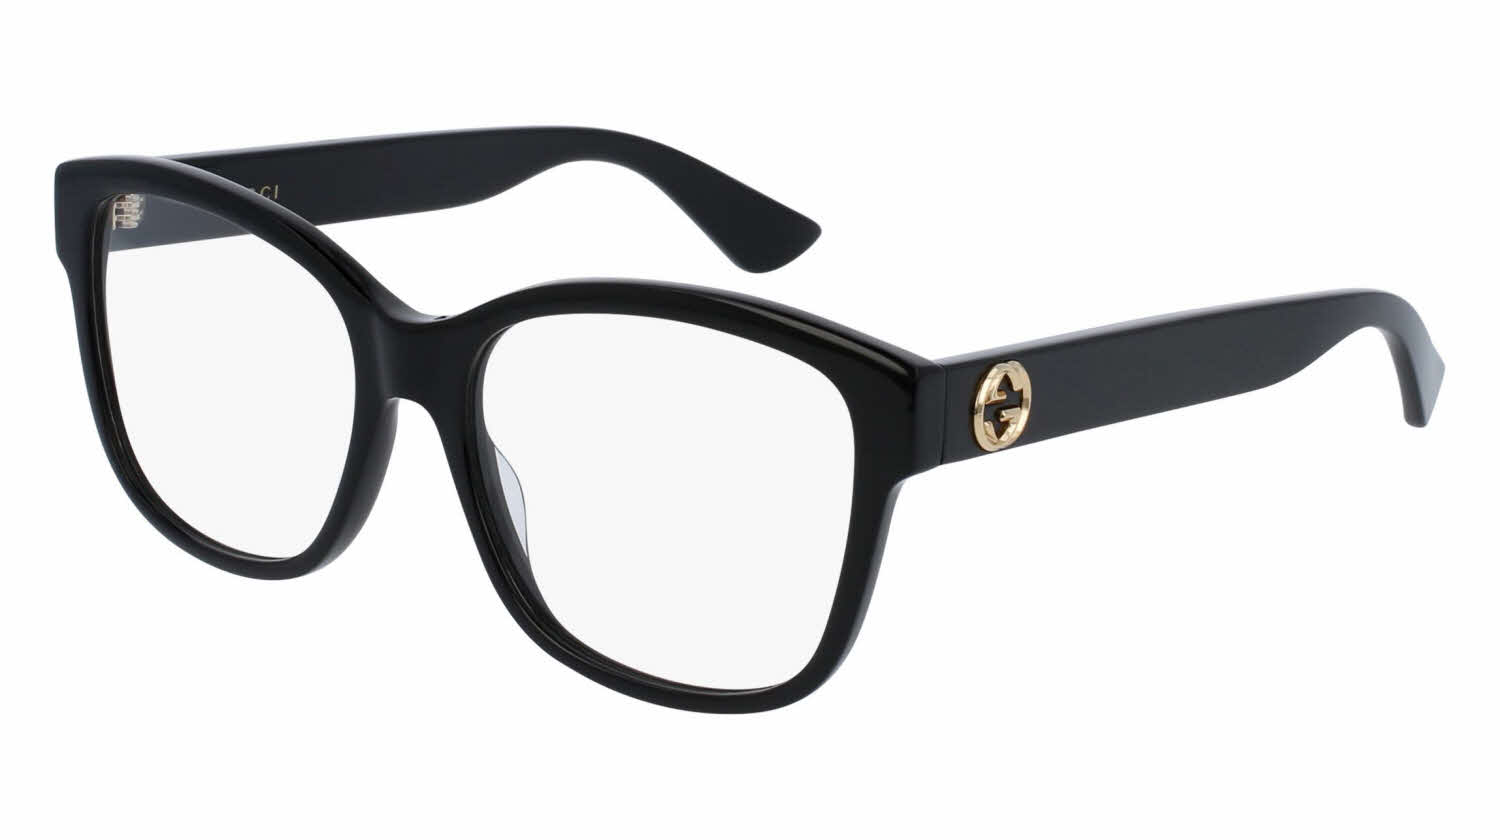 gucci glasses for boys